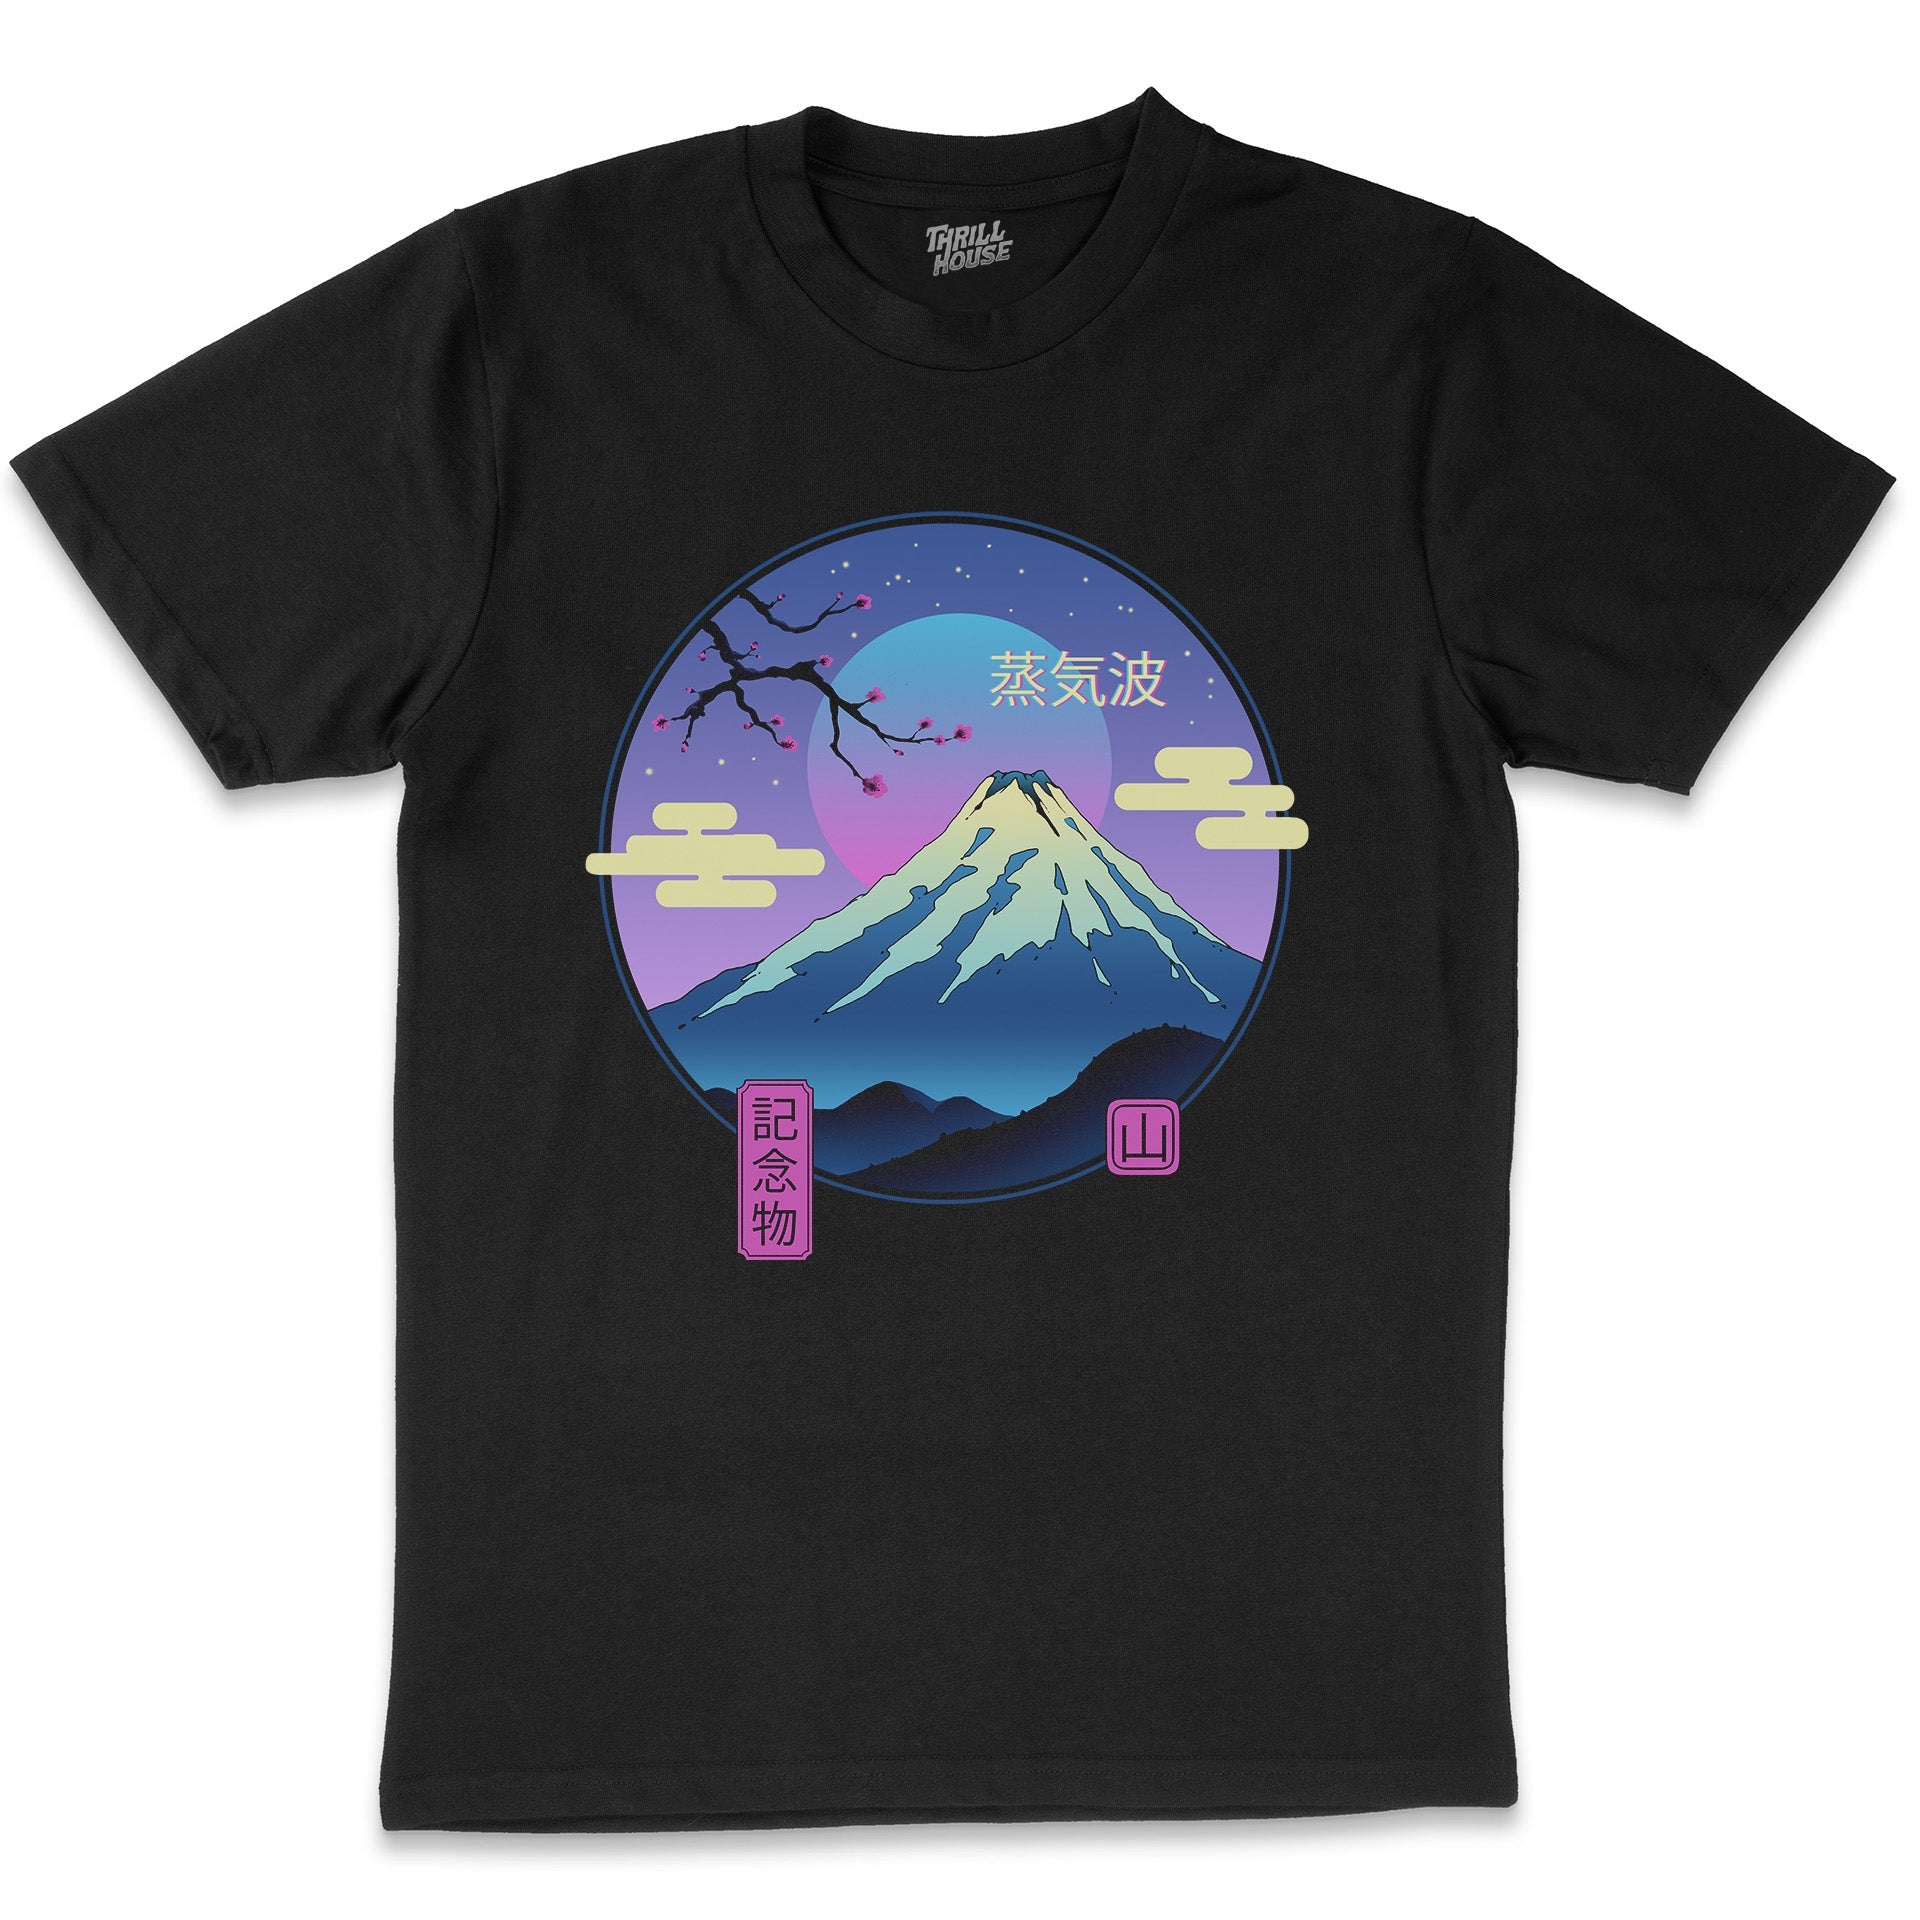 Vapour Landscape 80s Inspired Artsy Artistic Mt Fuji Japan Sunset Cool Neon Style Design Cotton T-Shirt